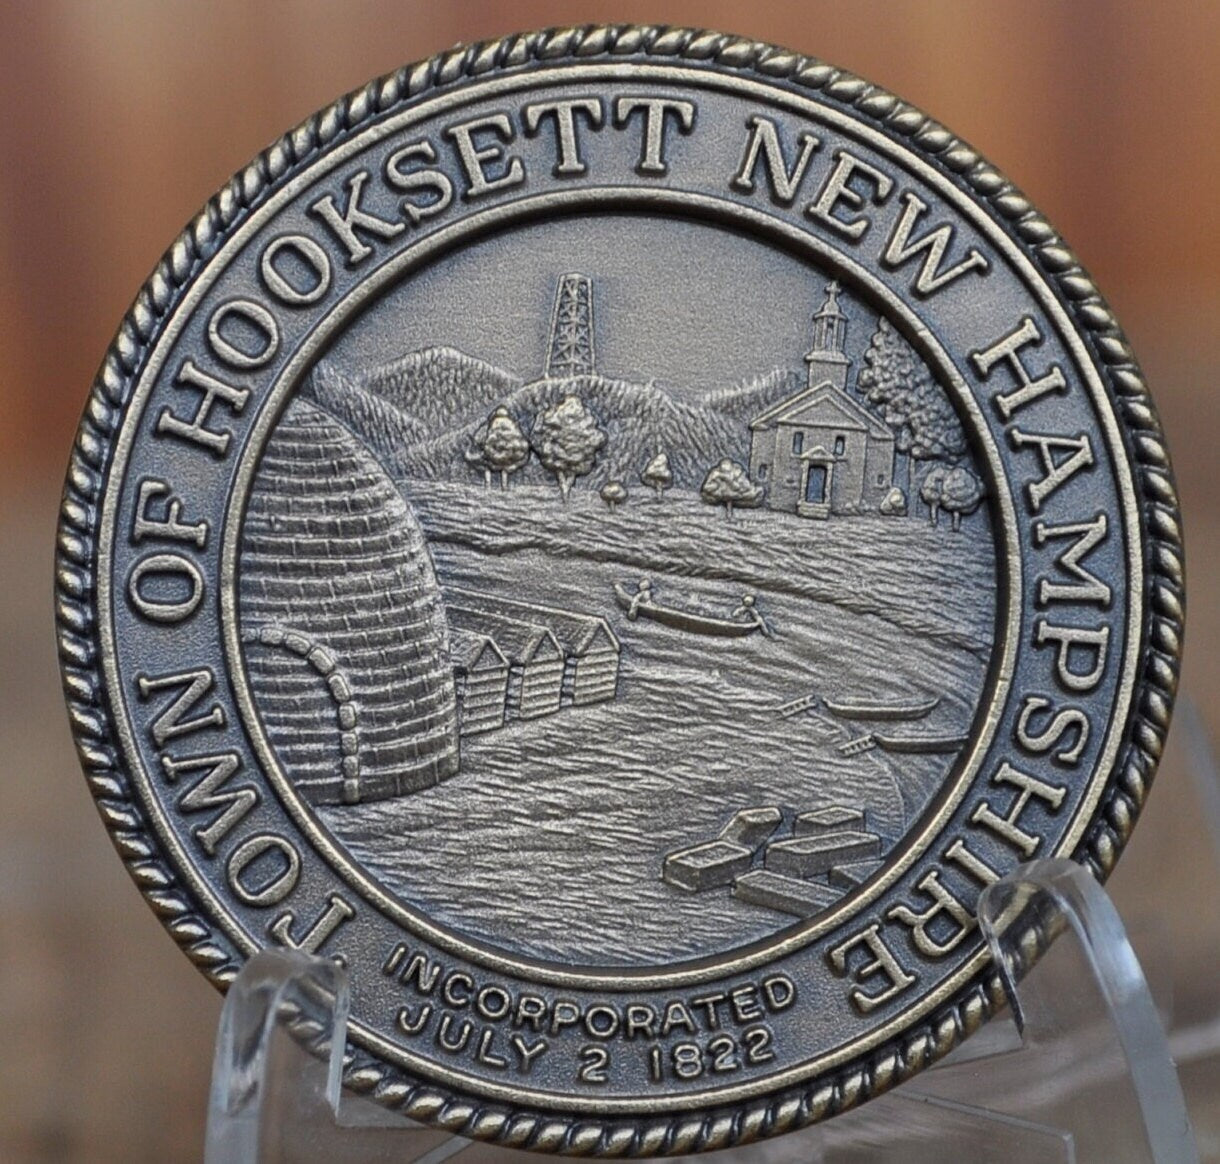 1972 Hooksett NH 150th Anniversary Token - Sterling Silver - Hooksett New Hampshire Anniversary Medal - Vintage Silver Medal